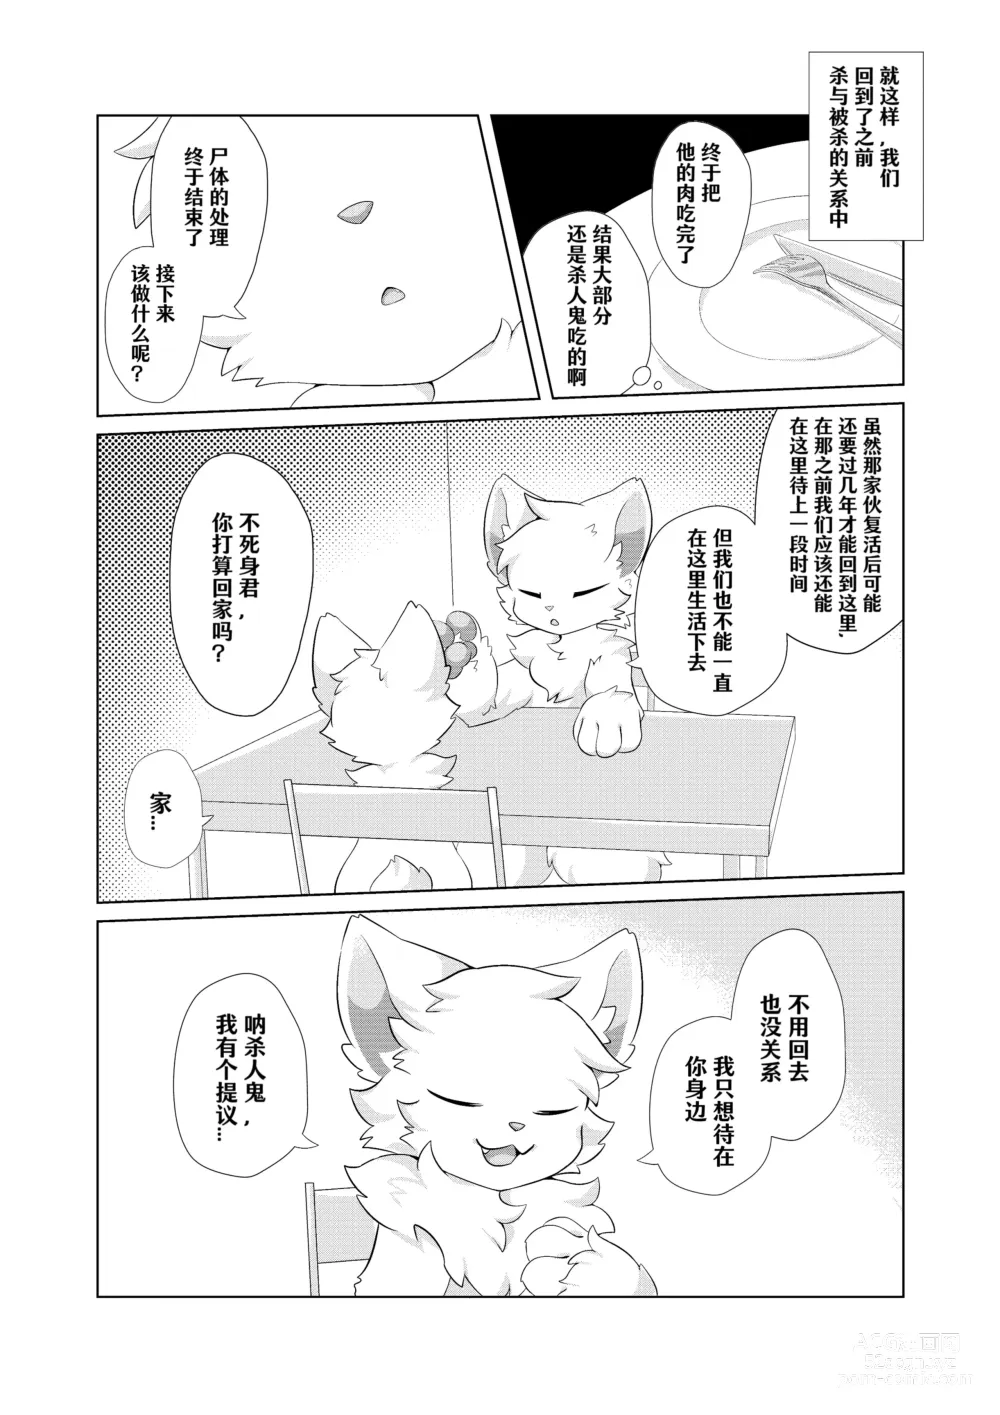 Page 67 of doujinshi 在生命长途中，与你携手同行！